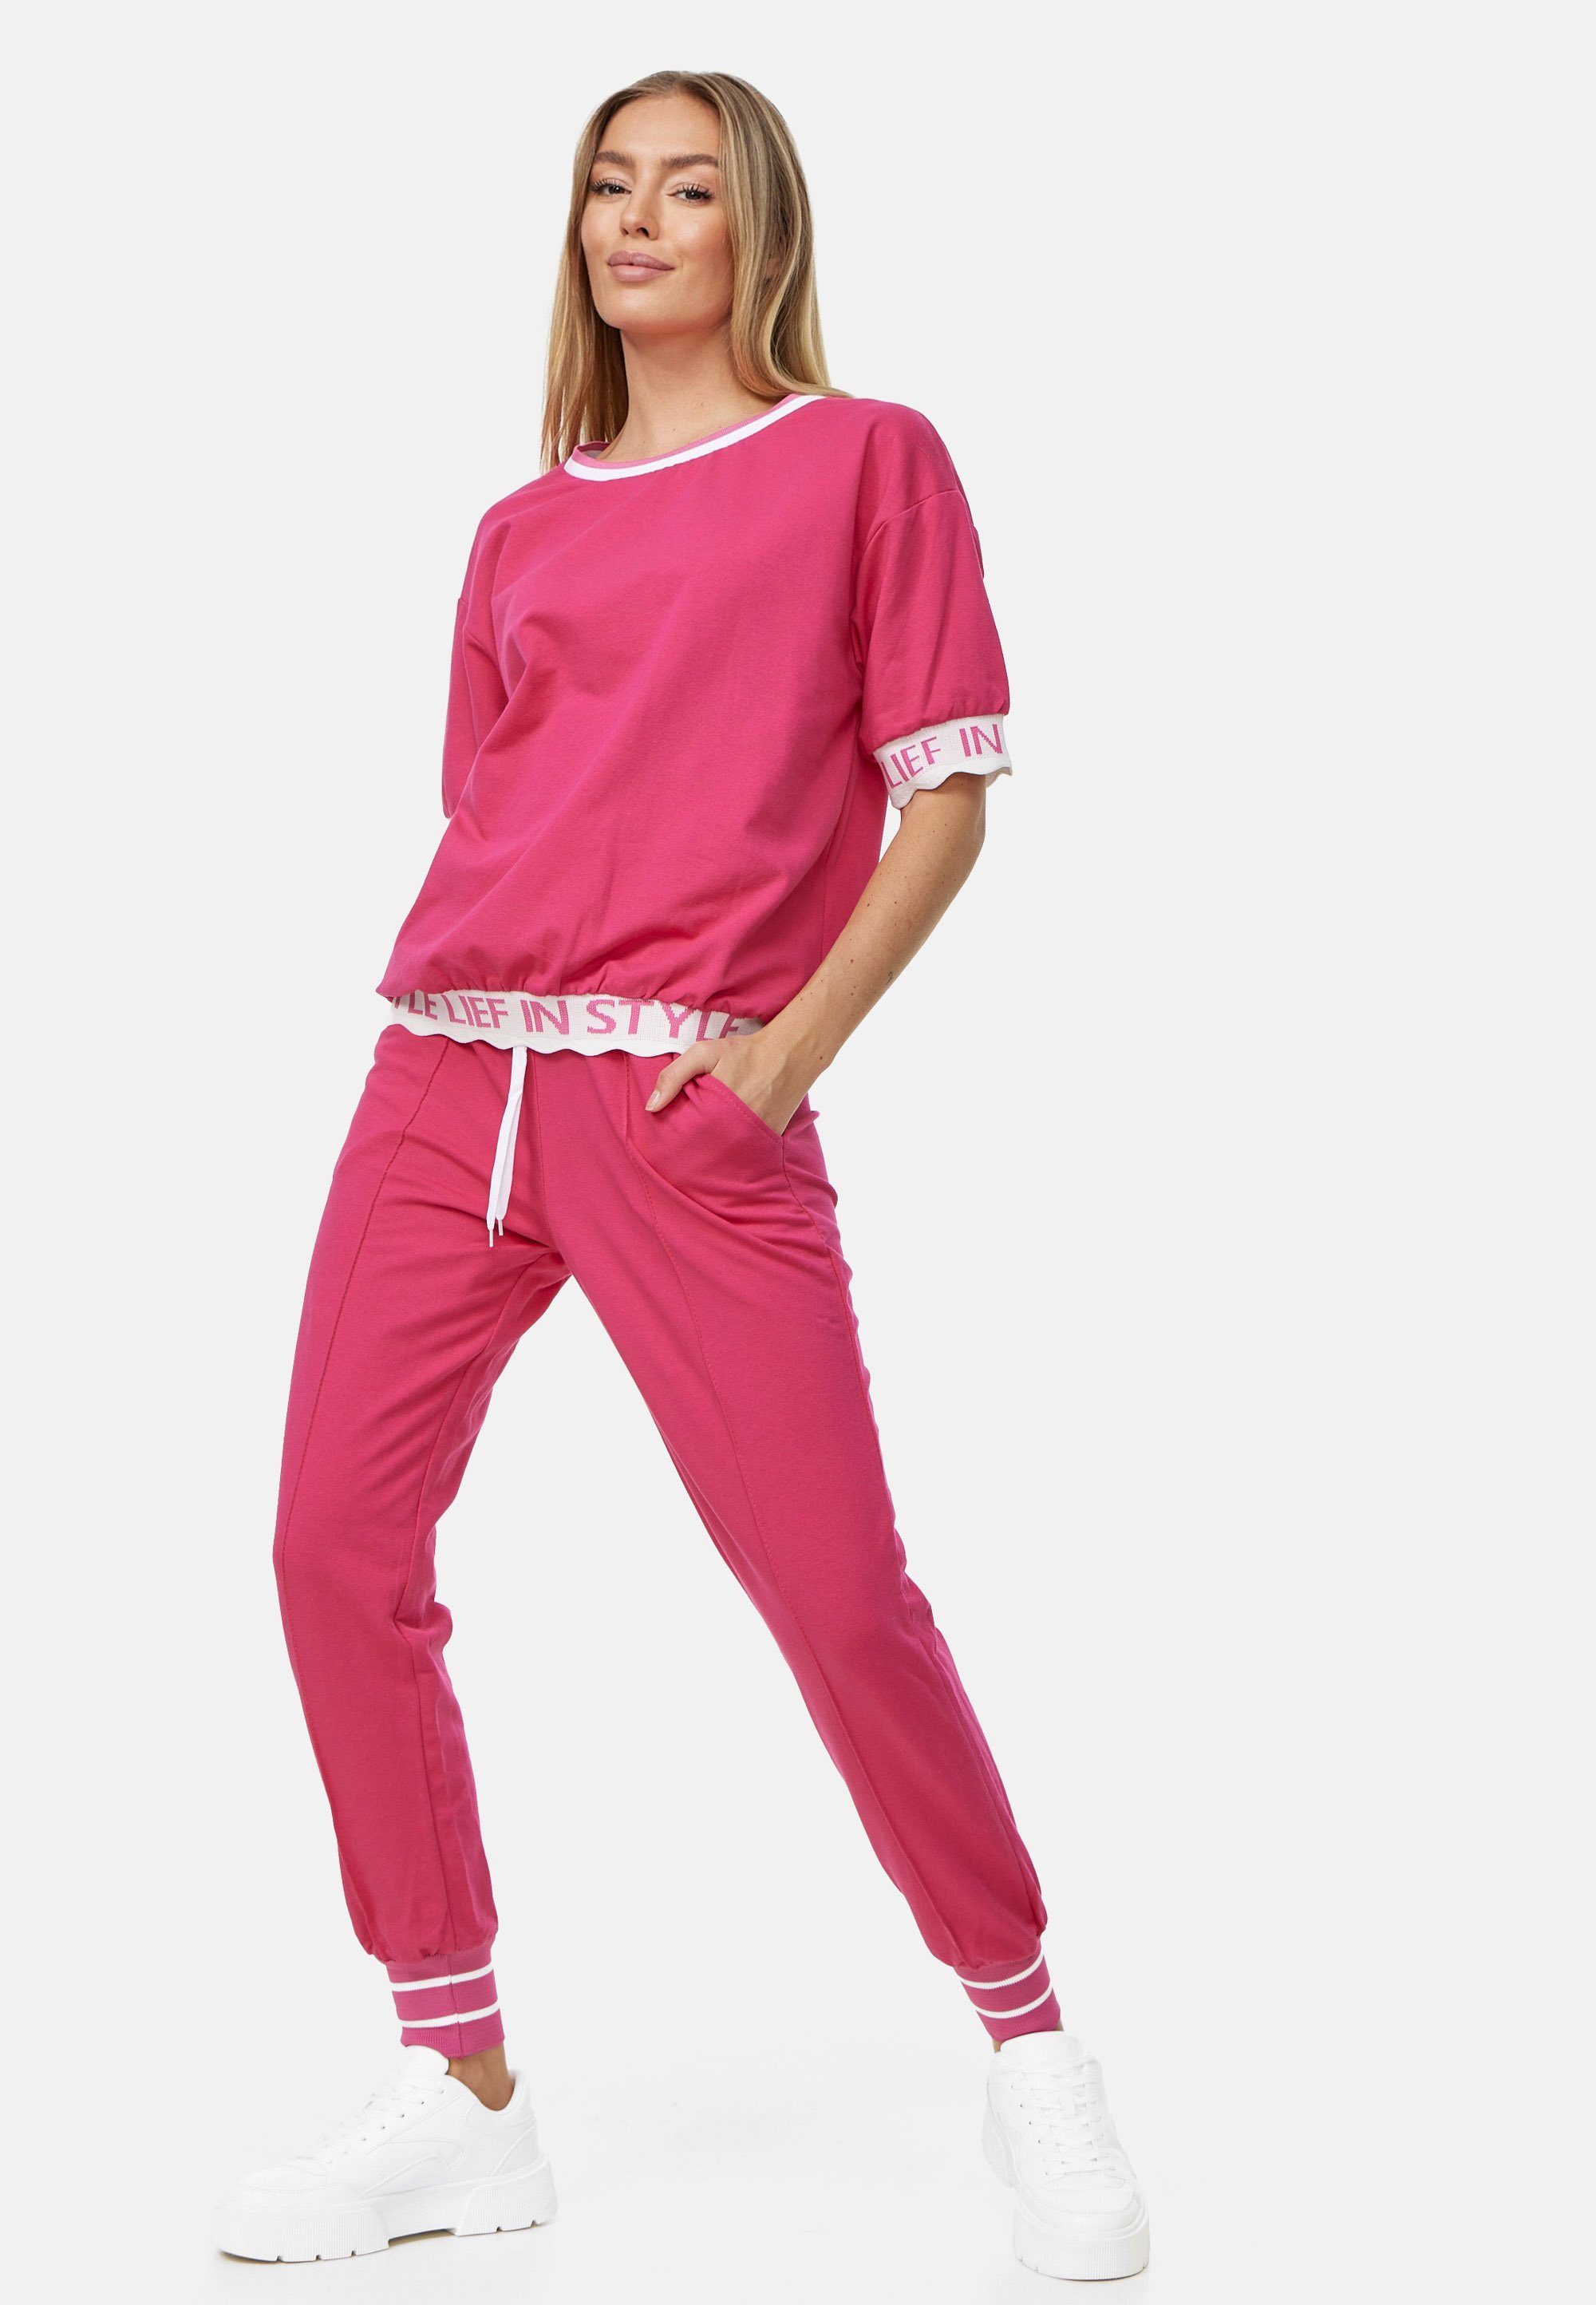 Decay T-Shirt mit stylishem rosa Schriftzug